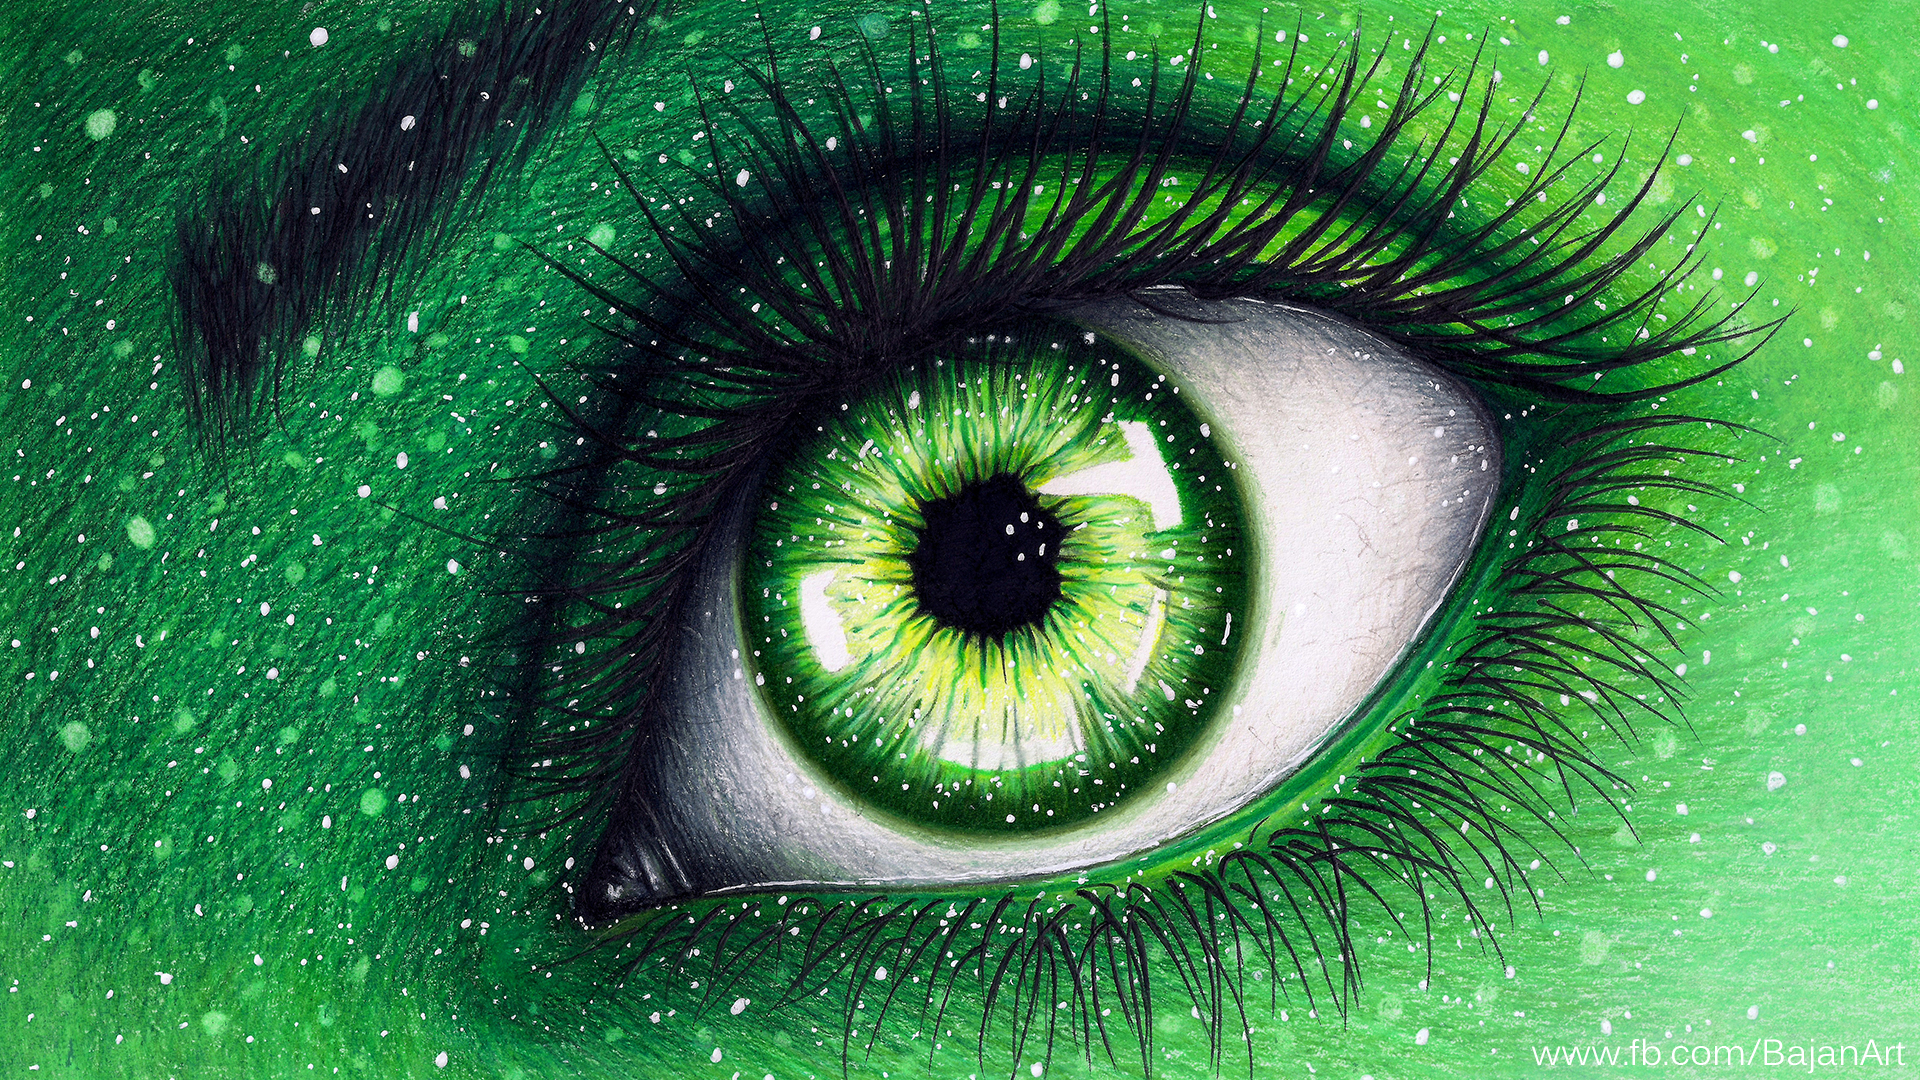 Green eye drawing by BajanArt